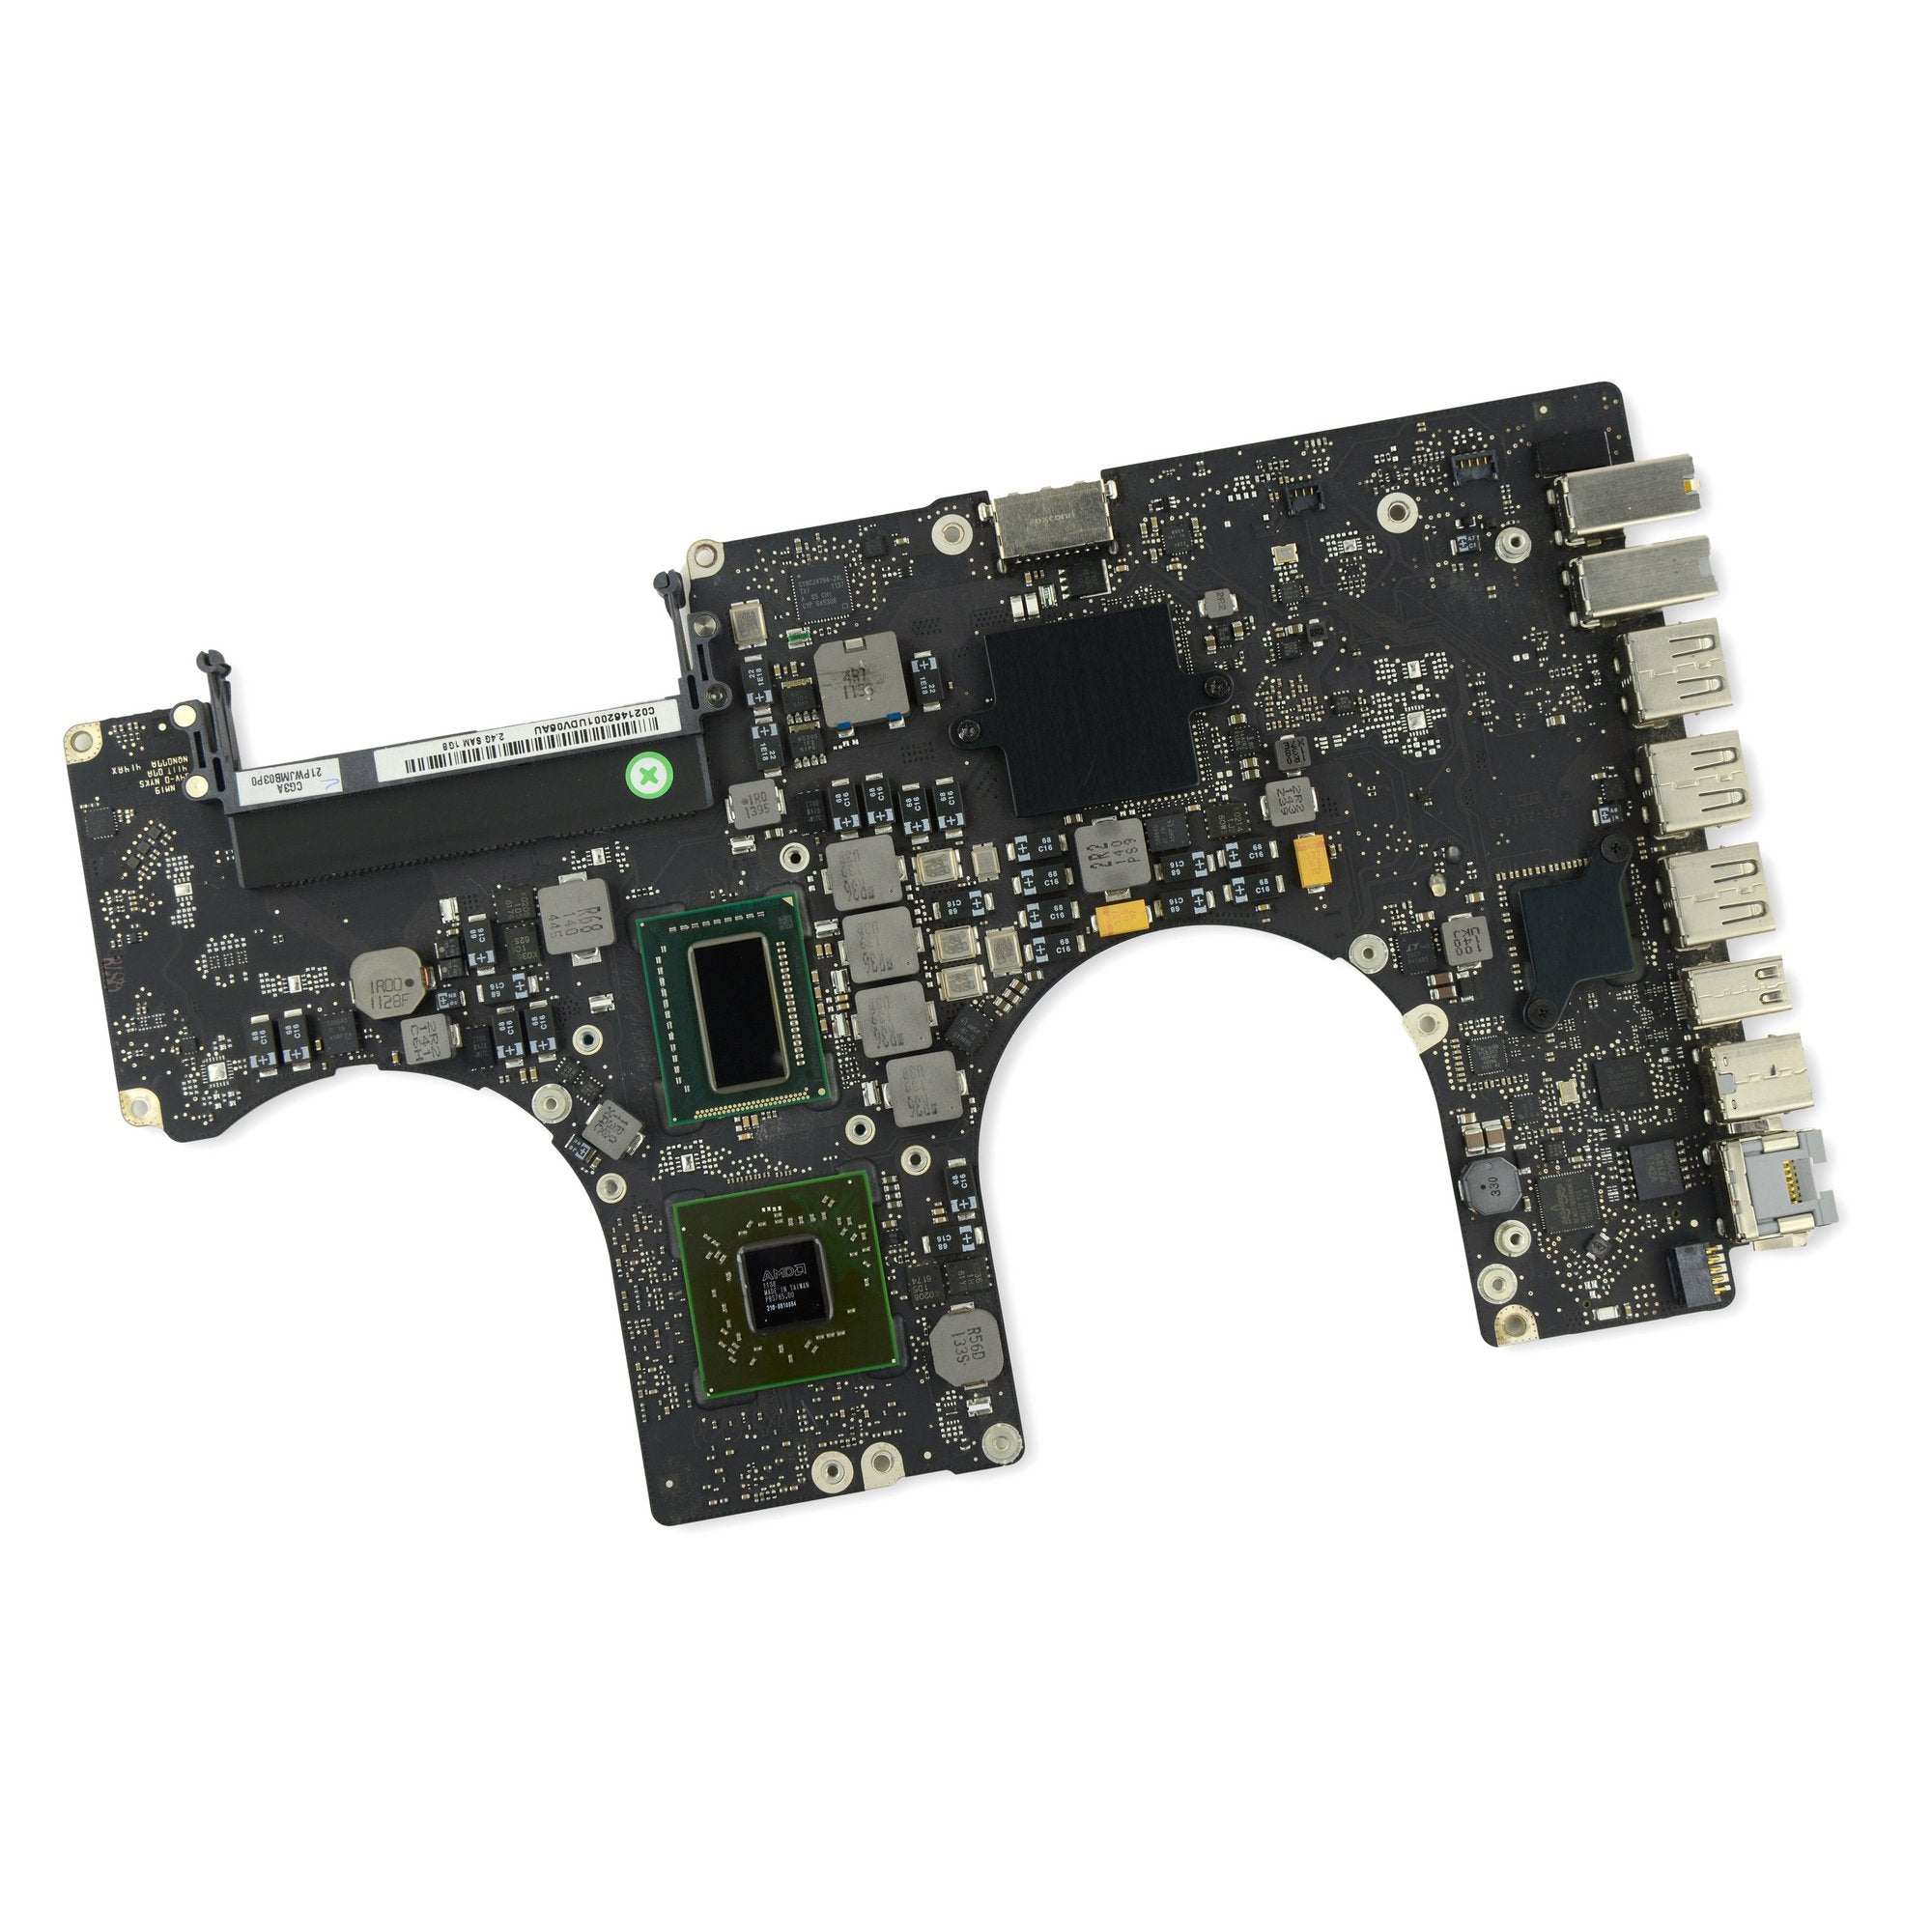 MacBook Pro 17" Unibody (Late 2011) 2.4 GHz Logic Board